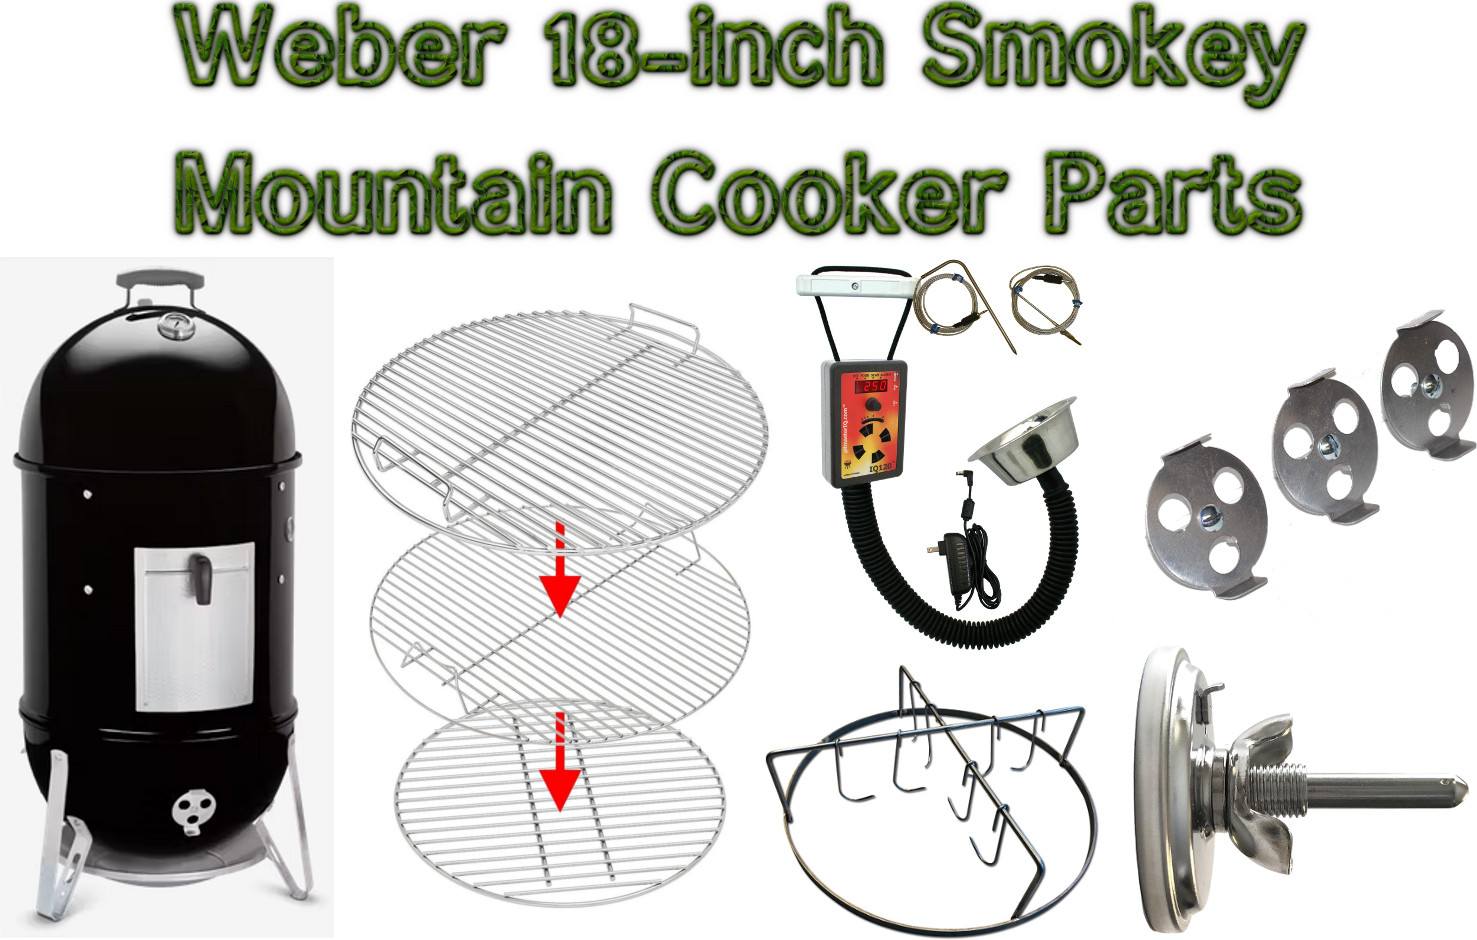 Weber 18-inch Smokey Mountain Cooker Parts